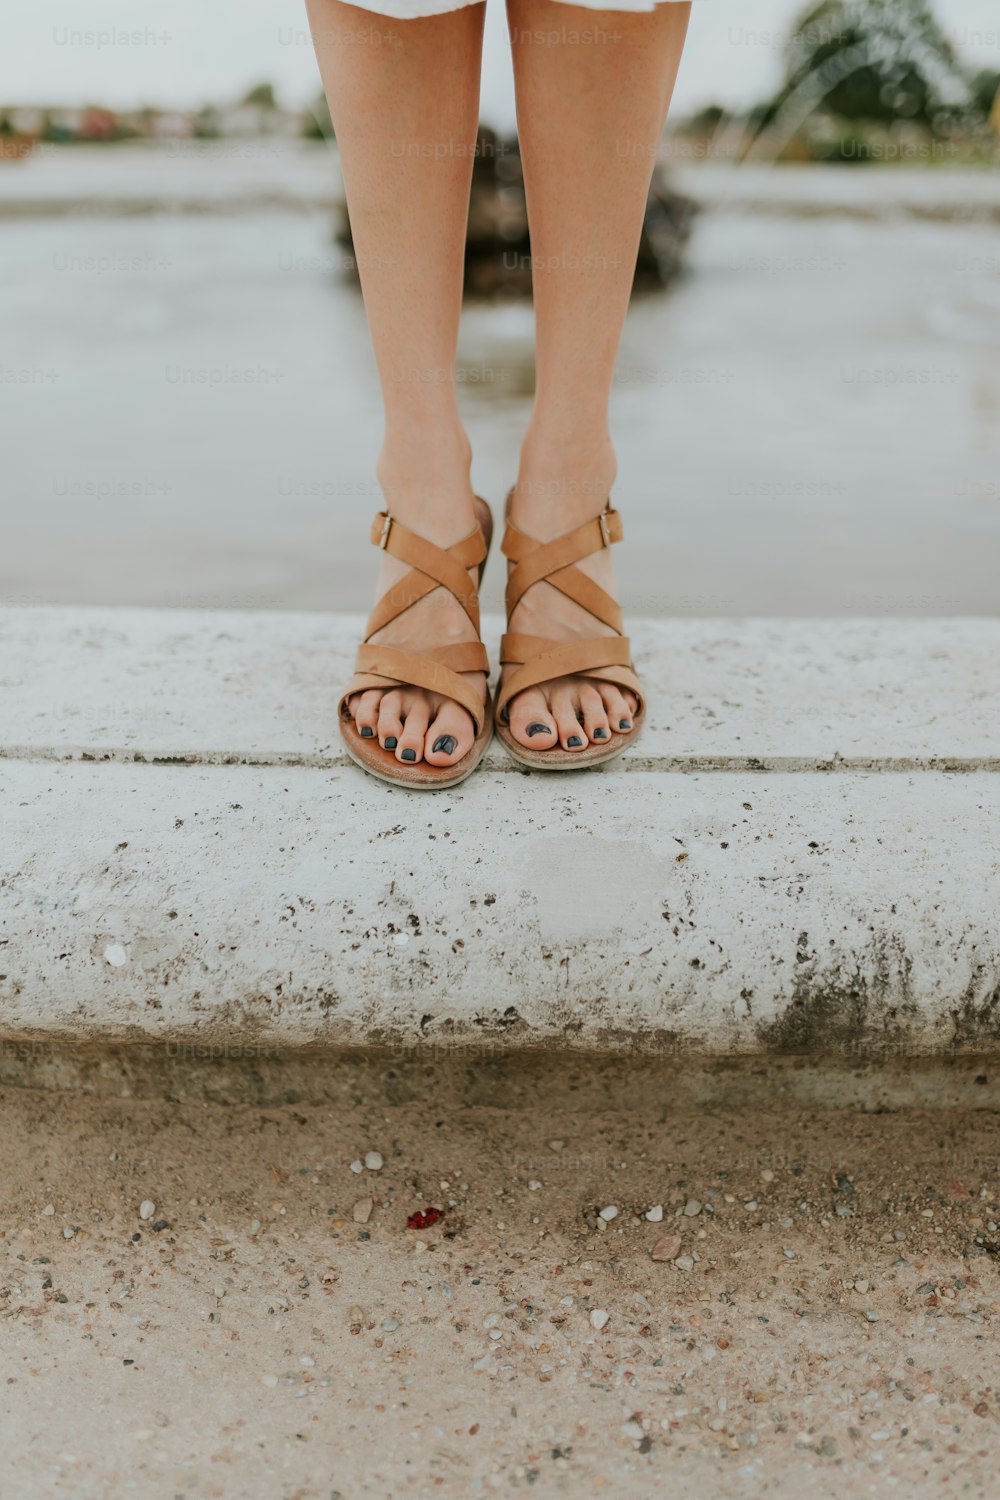 Piedi di una donna in sandali in piedi su una sporgenza